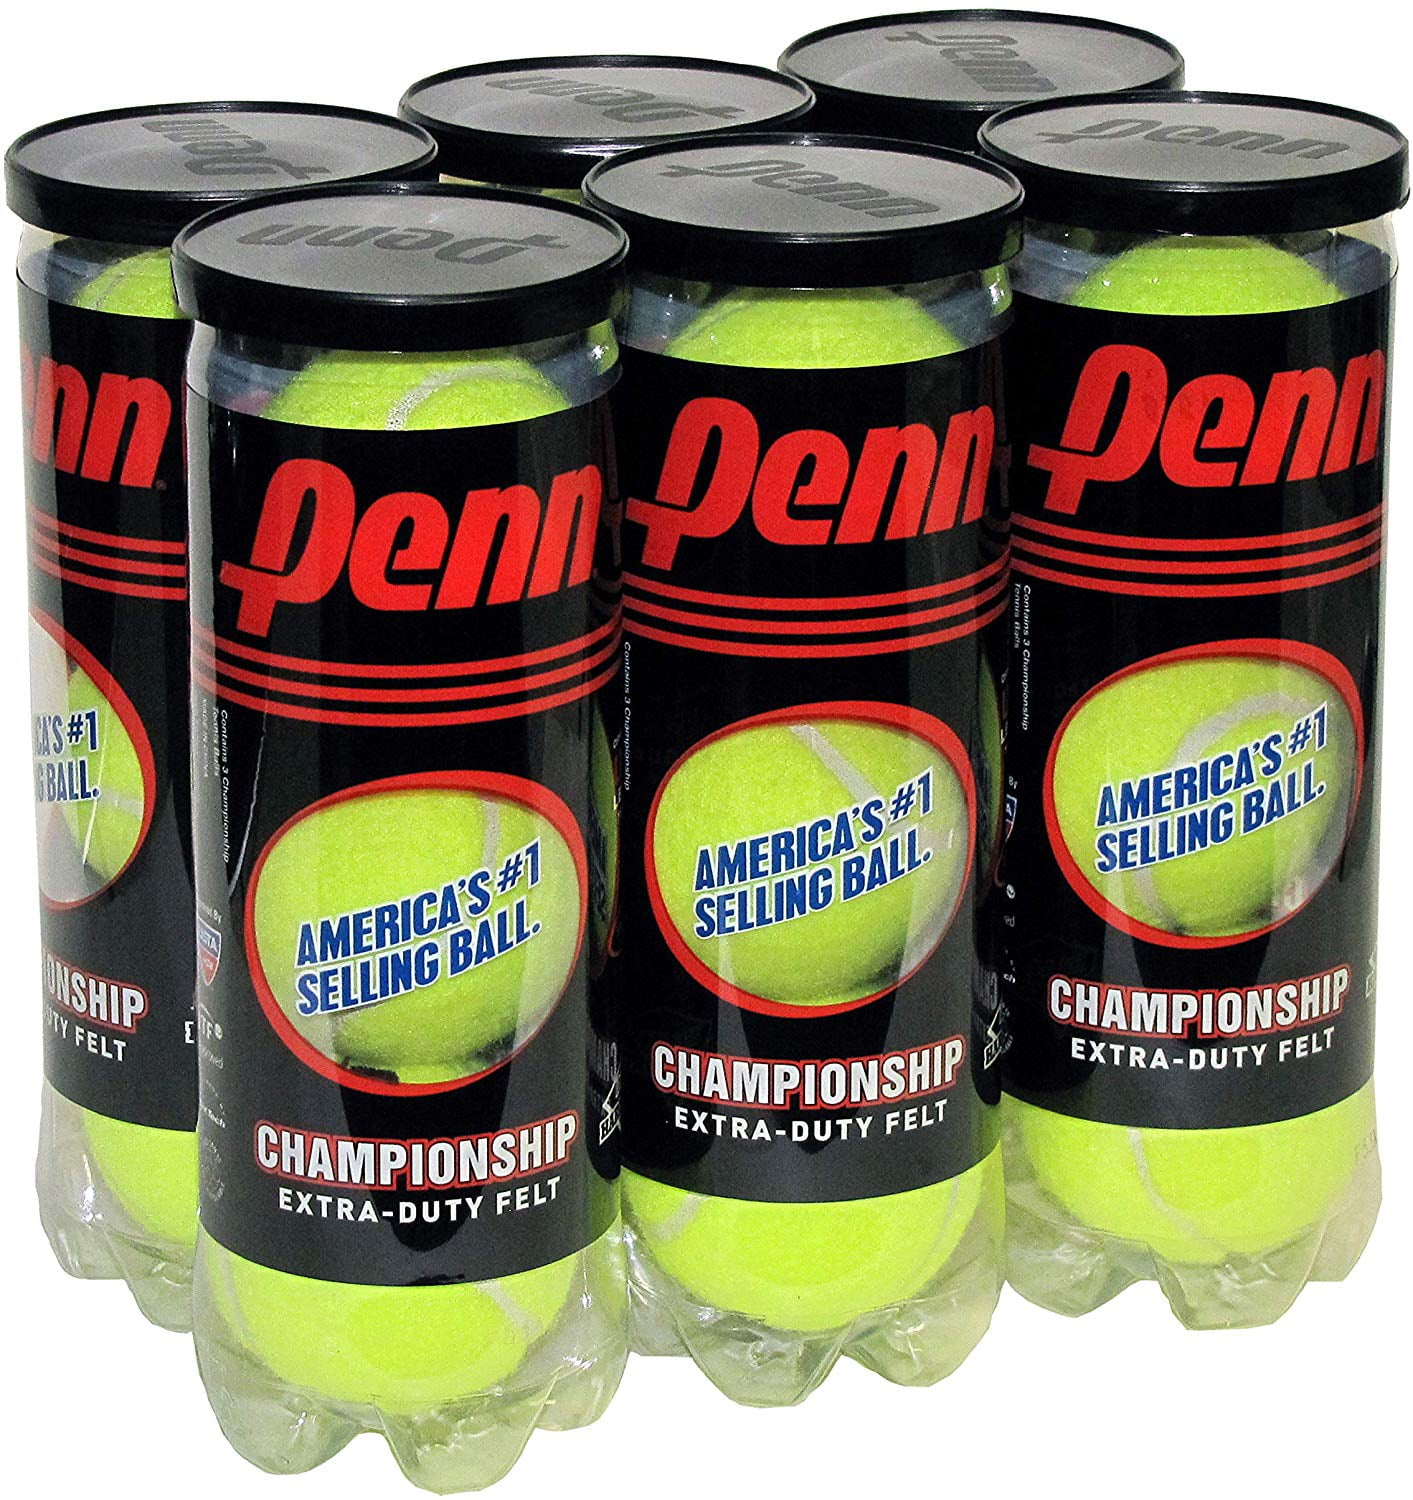 Penn Championship Extra Duty Tennis Ball-Choose a single pack or Lot/Bulk 